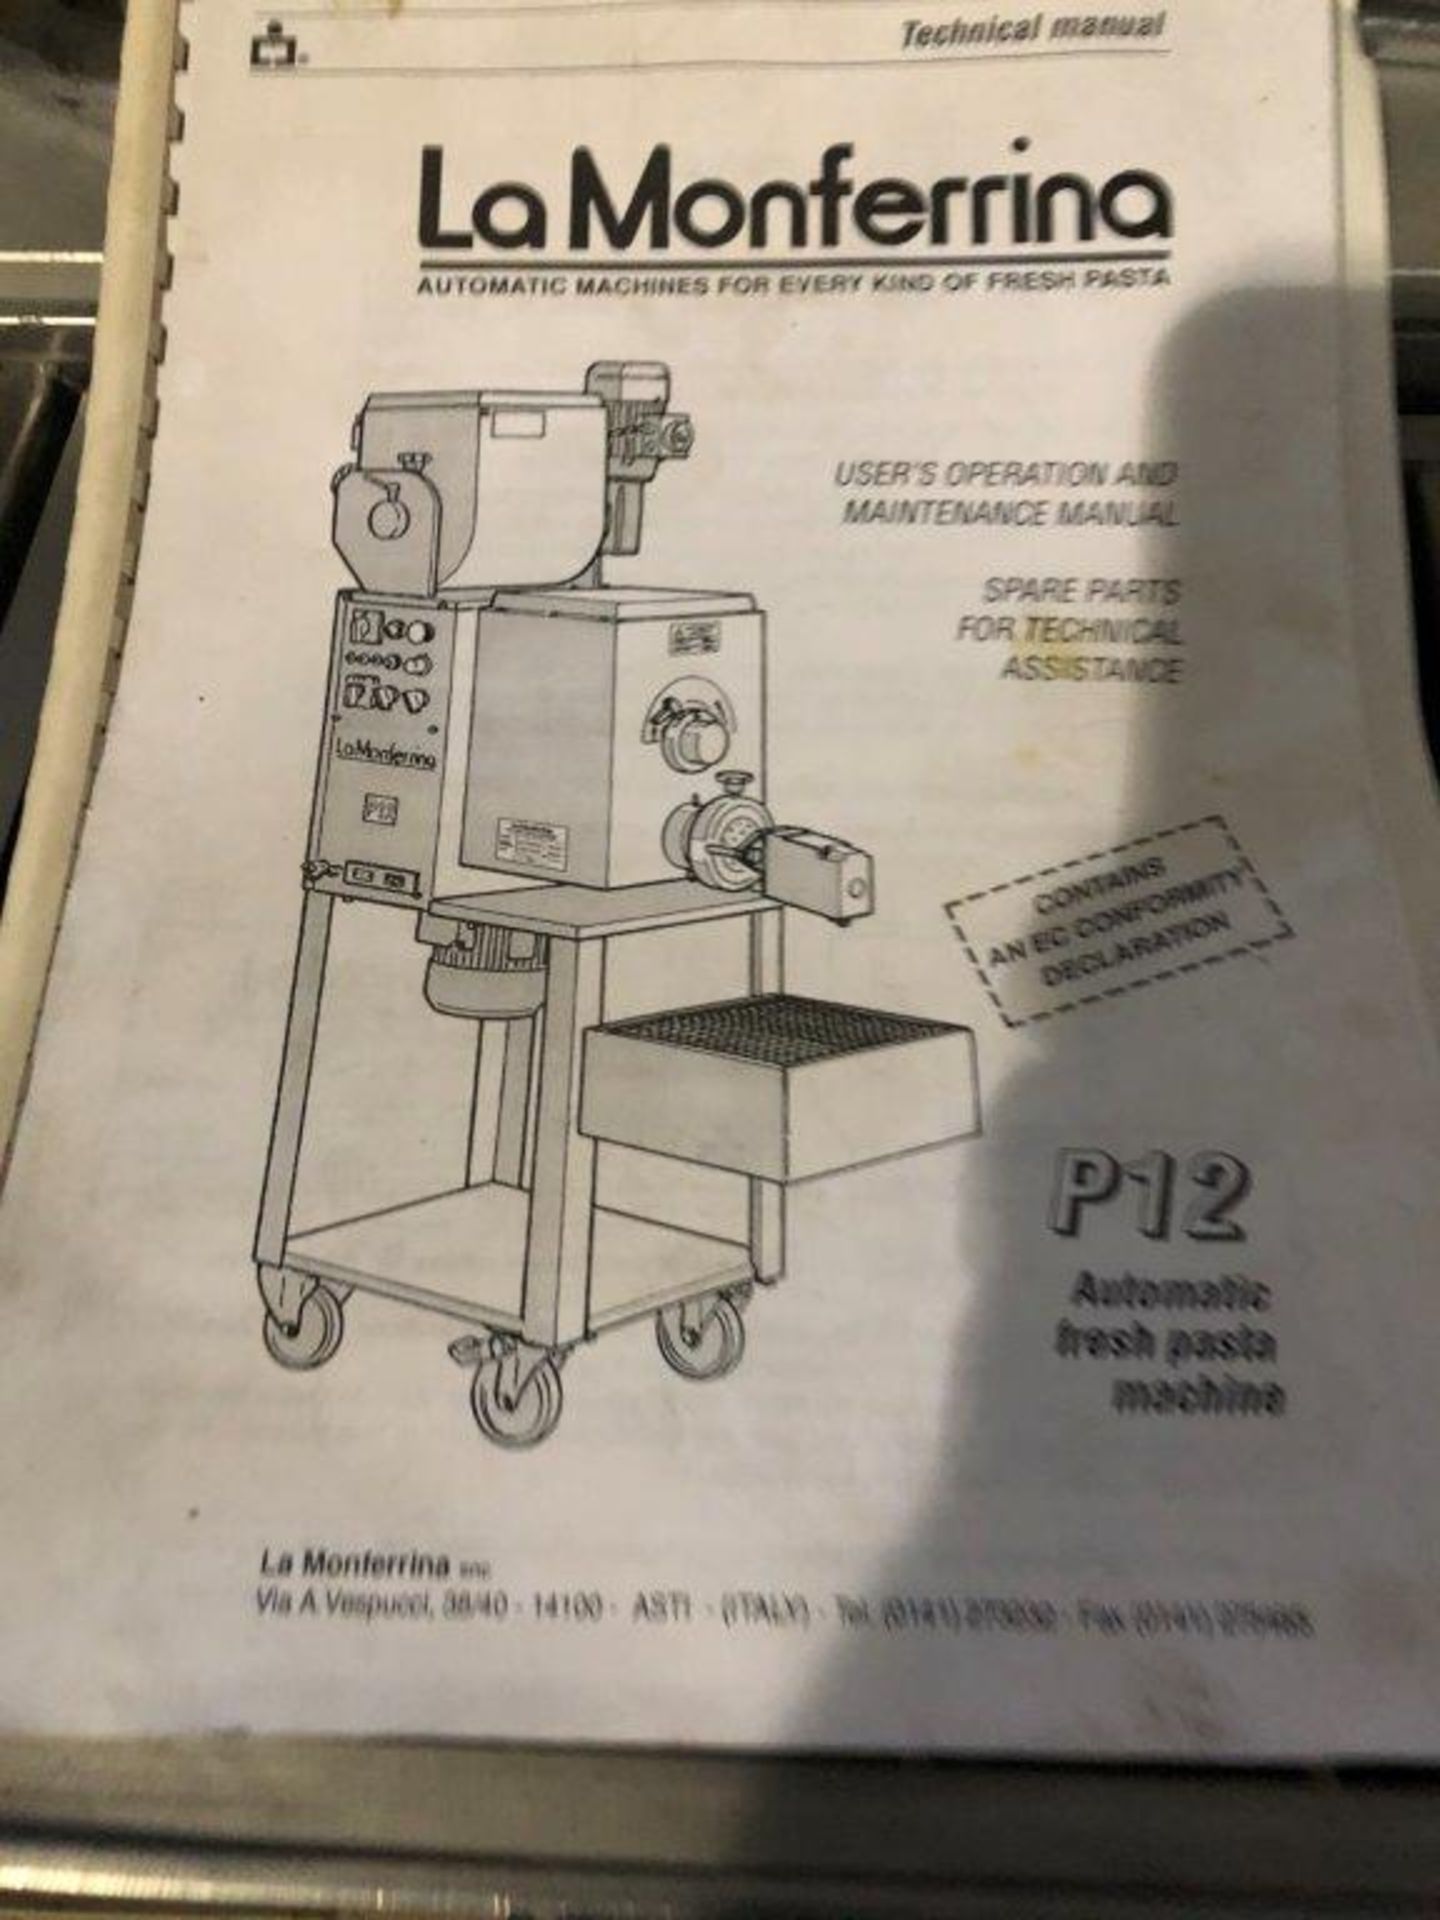 La Monferina P12 automatic fresh pasta machine - Image 3 of 3